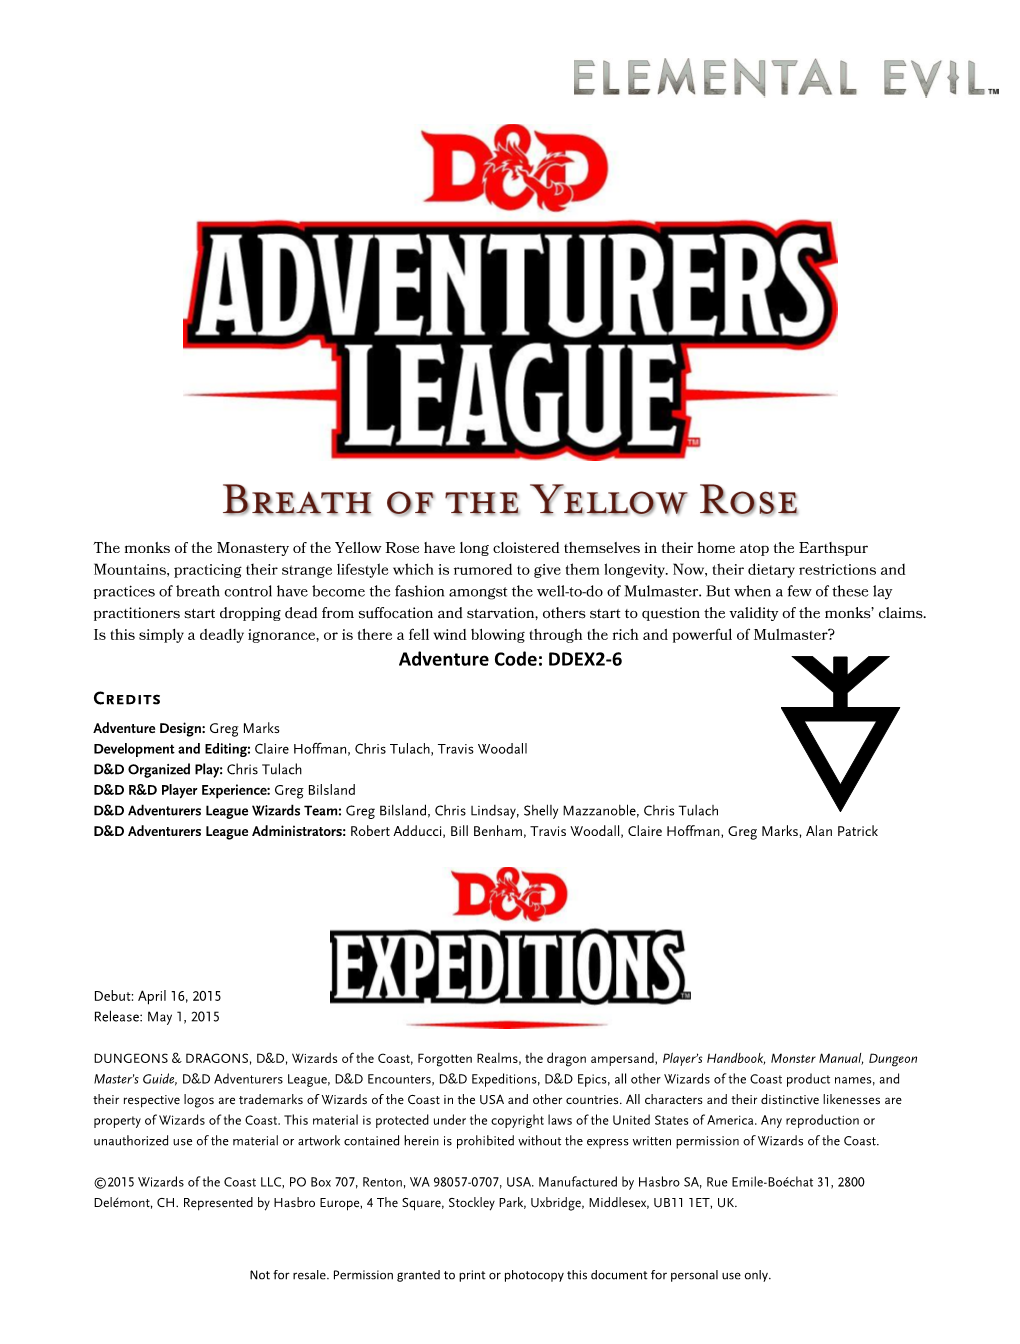 Adventure Code: DDEX2-6